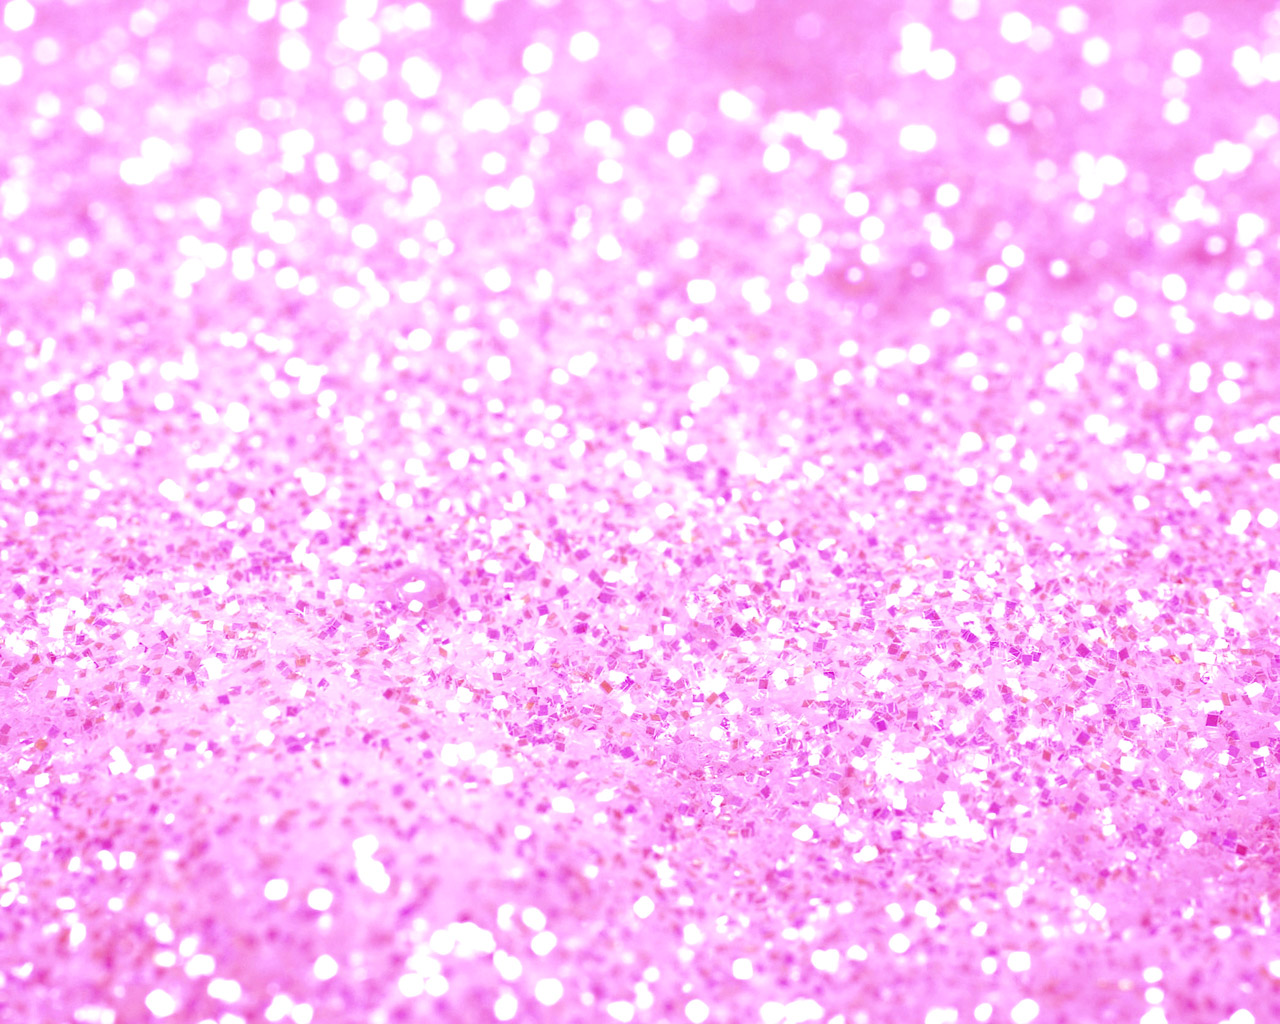 http://3.bp.blogspot.com/-81PmIbL89vc/TkrRvlu-XQI/AAAAAAAADbM/zkRvsA5xO6w/s1600/pink+glitter+wallpaper+3.jpg